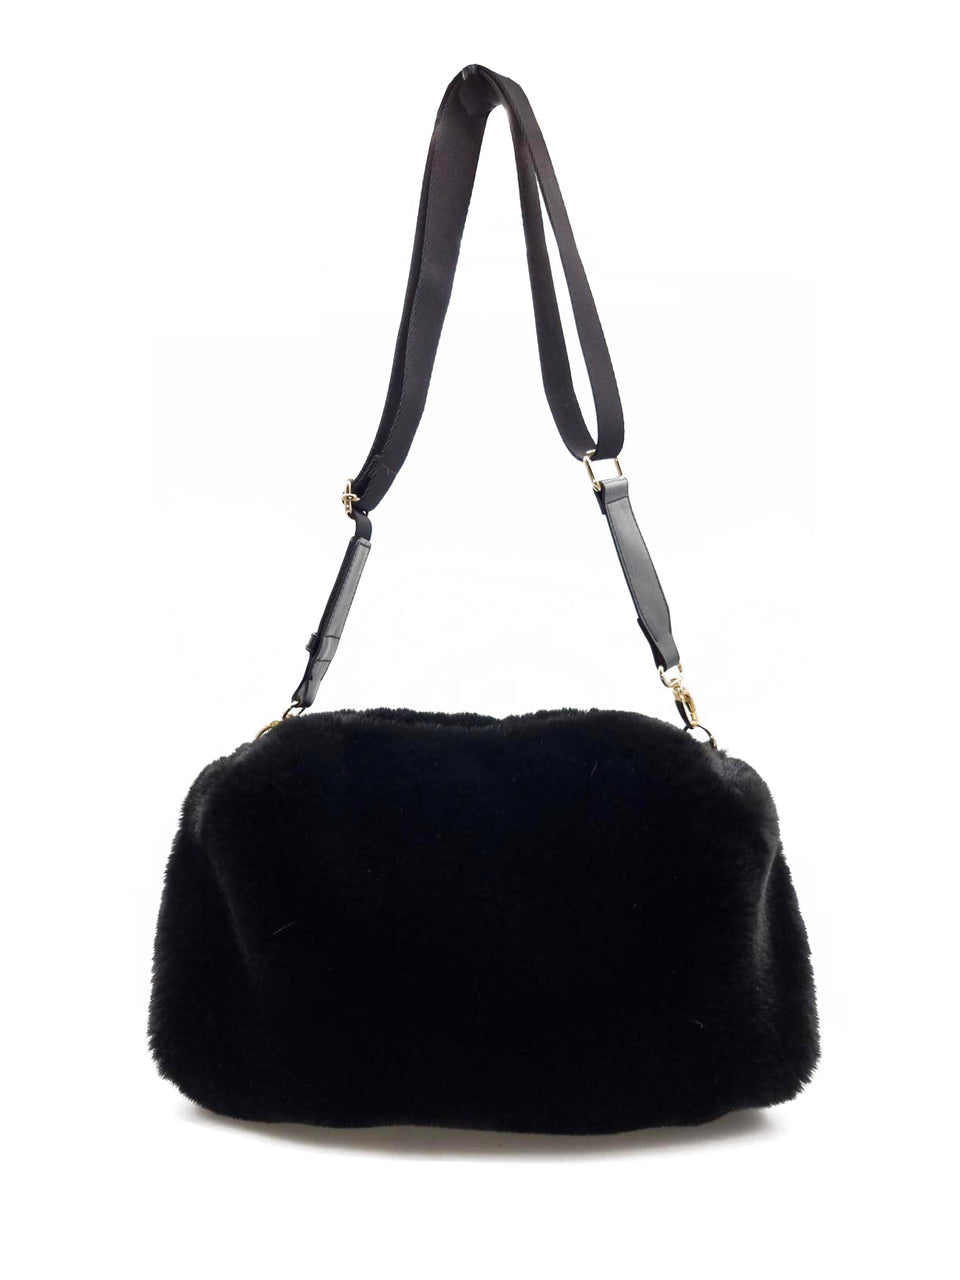 Second-Hand Handbags, Purses & Women's Bags for Sale in Northern Ireland |  Gumtree